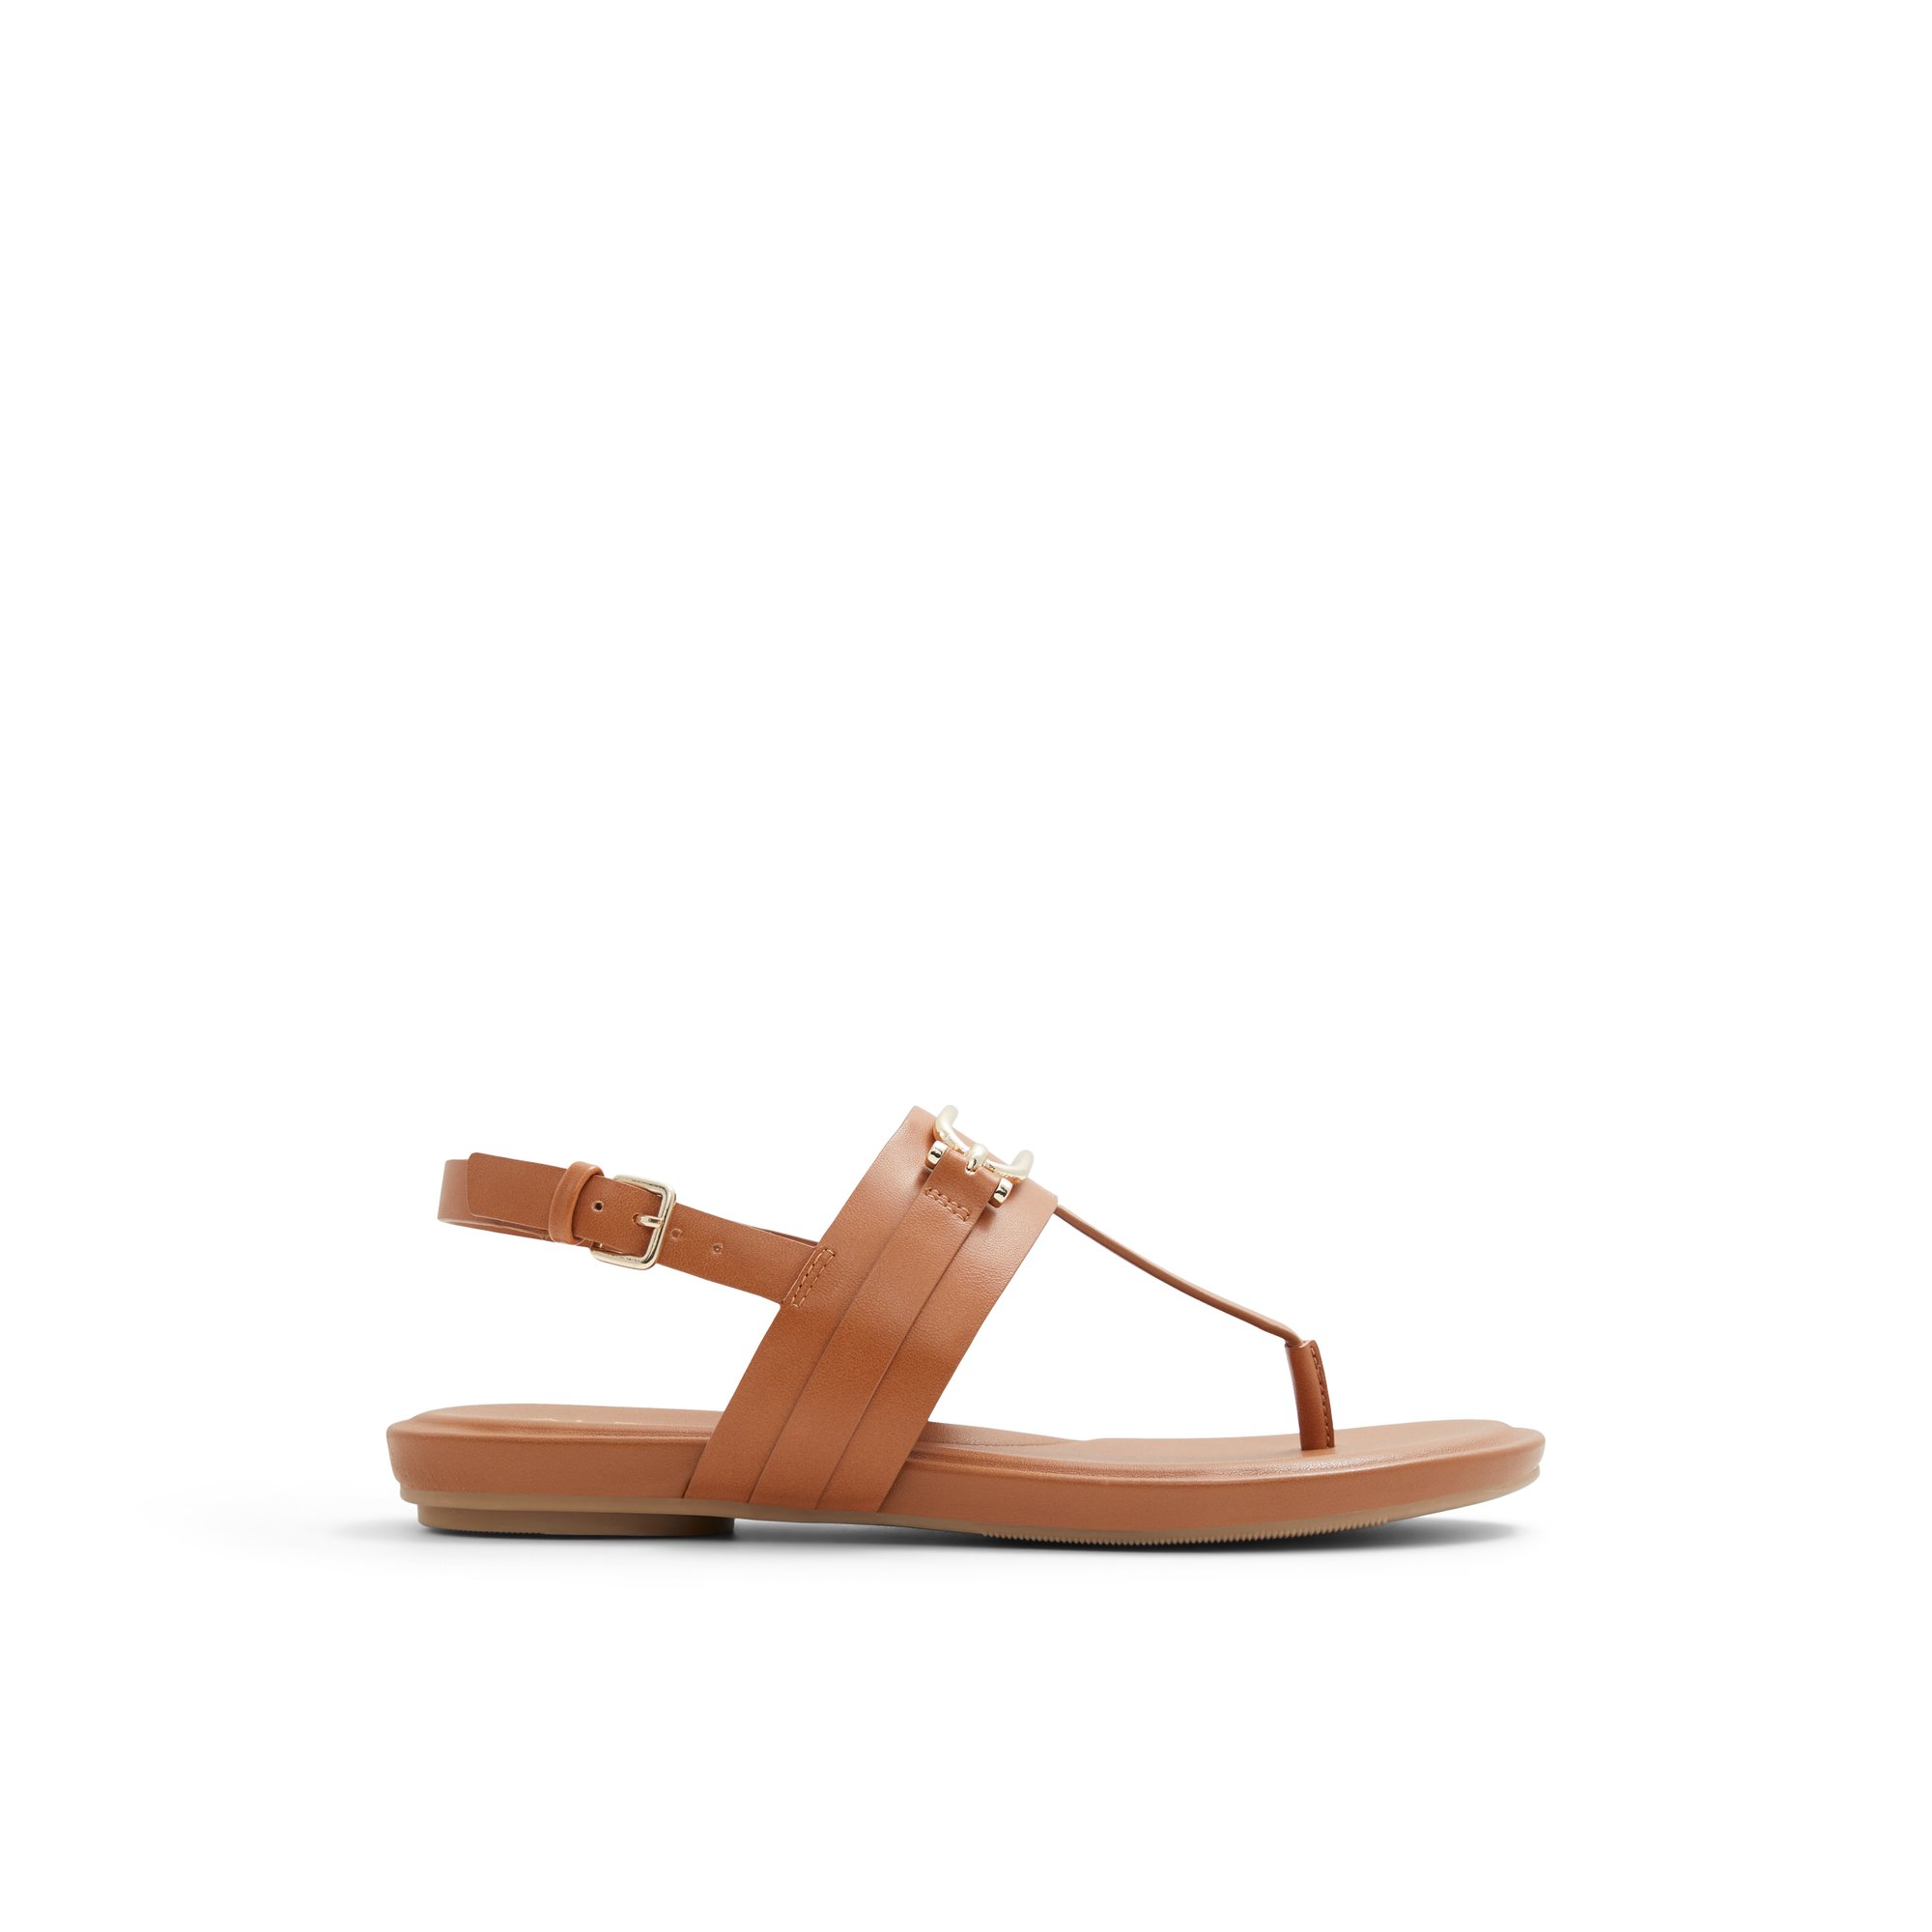 ALDO Adraynwan - Women's Sandals Flats - Brown